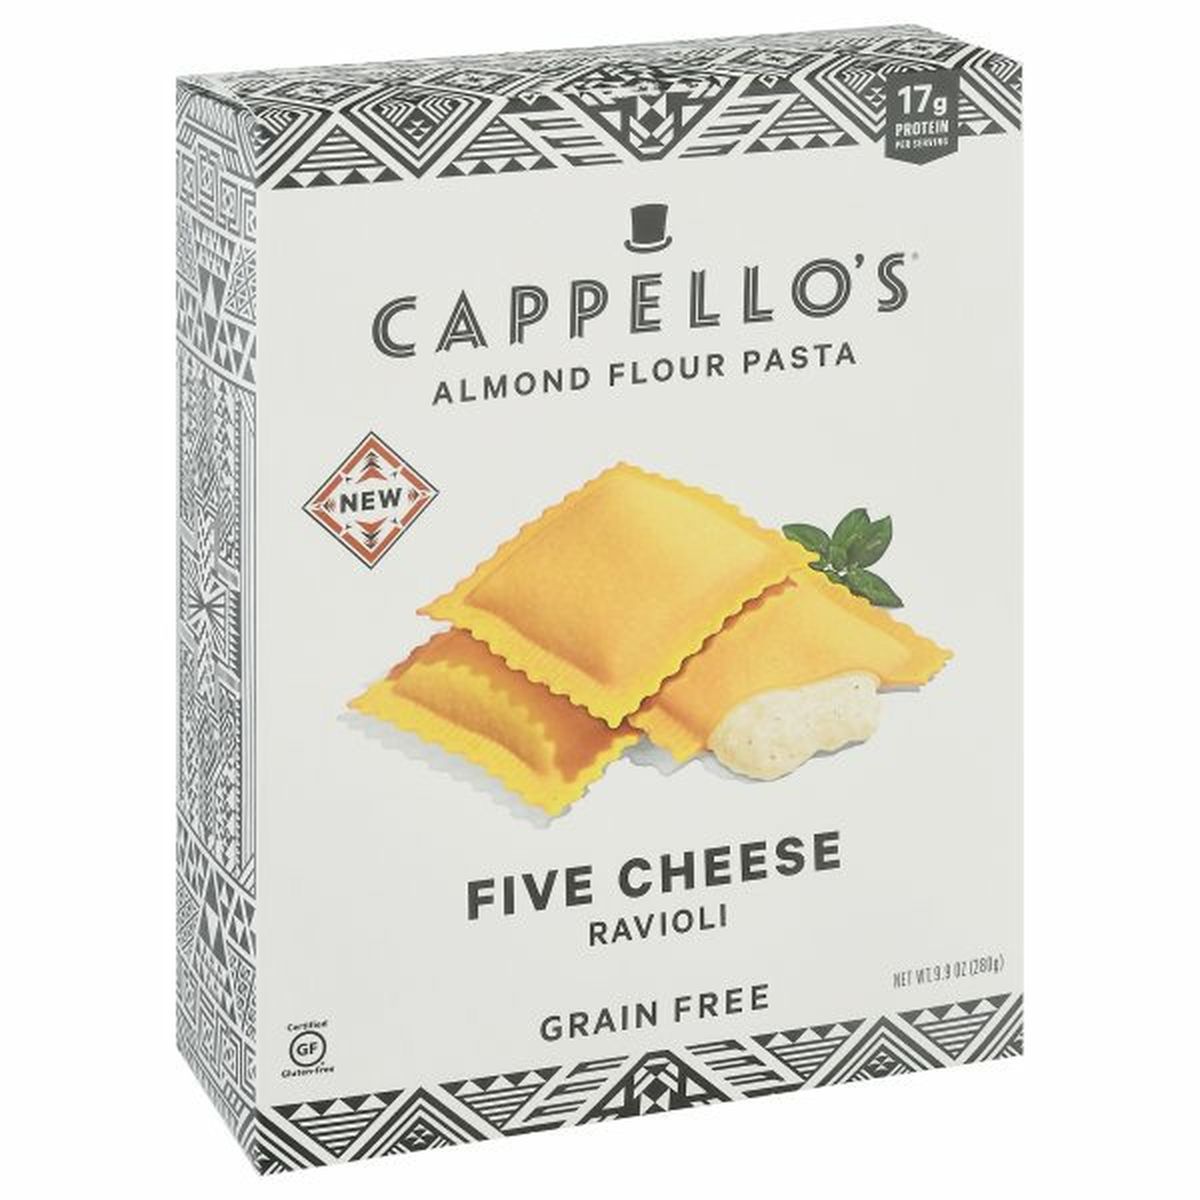 Calories in Cappello's Ravioli, Five Cheese